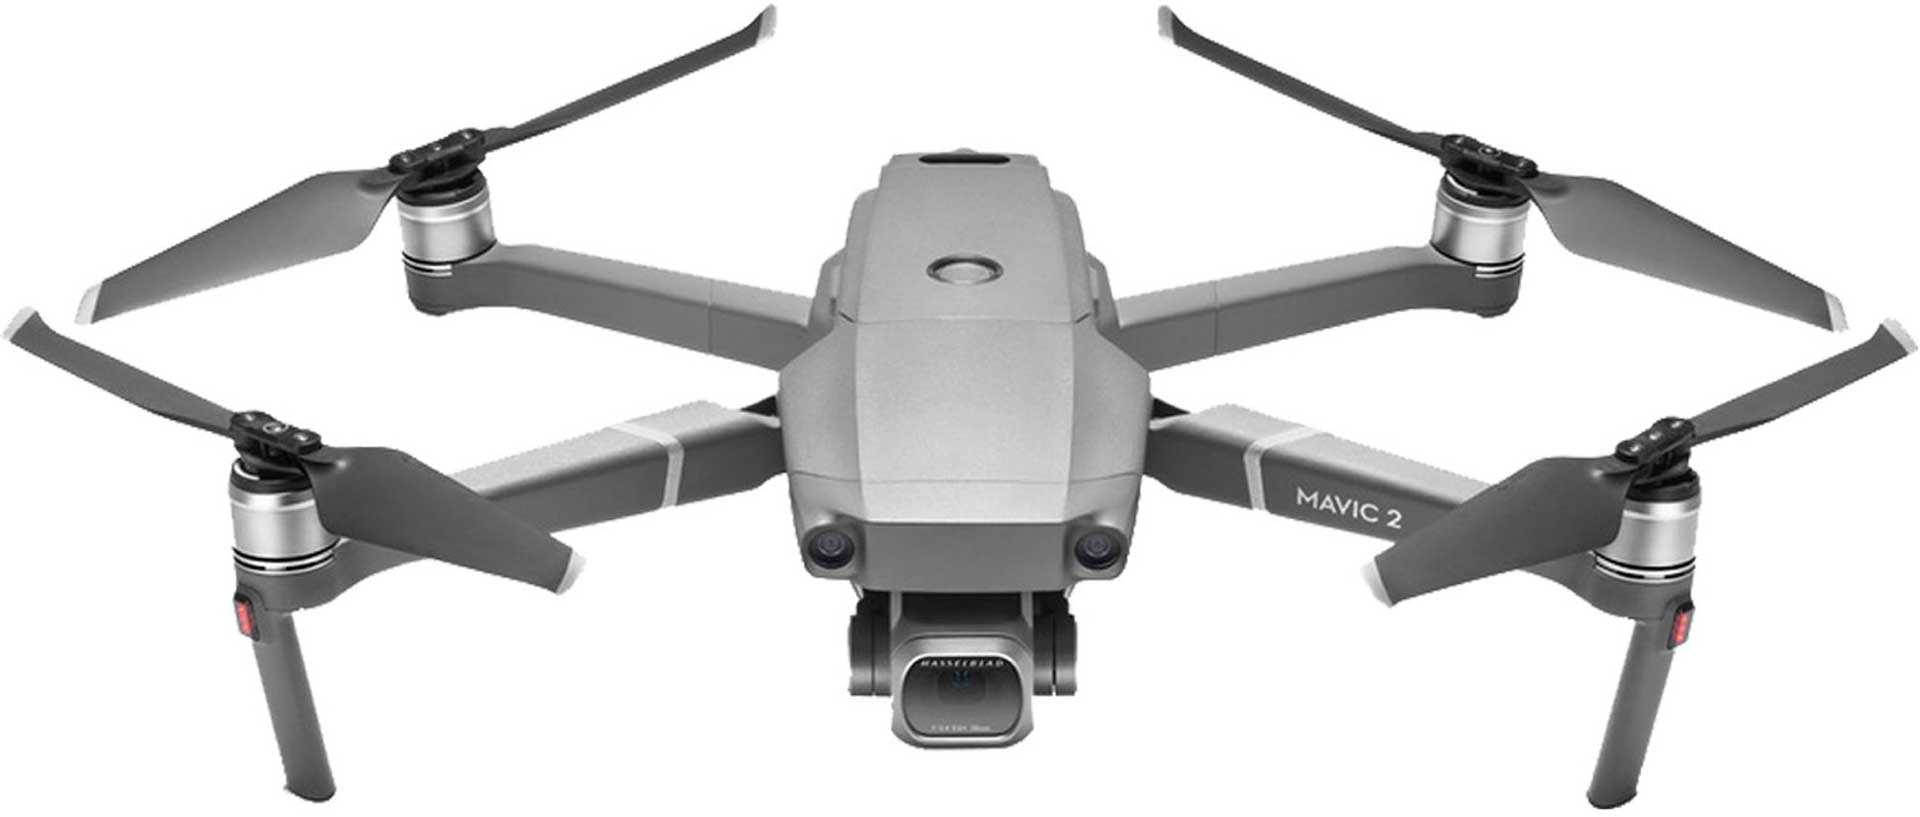 DJI MAVIC 2 PRO AVEC CAMÉRA HASELBLAD L1D-20C drone